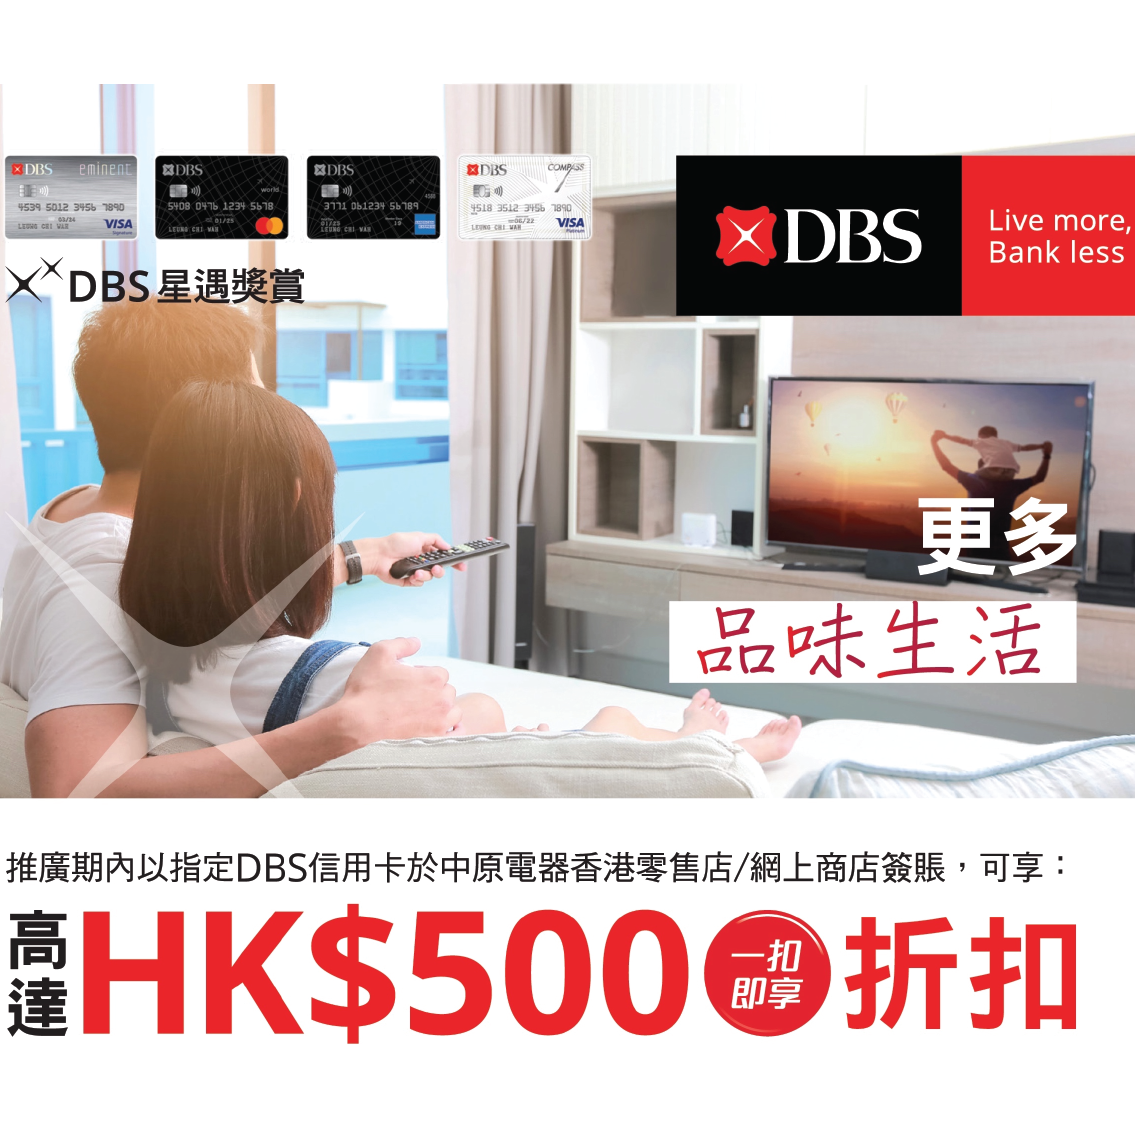 DBS信用卡 x 中原電器消費獎賞！10月31日或之前高達「一扣即享」HK$500折扣！